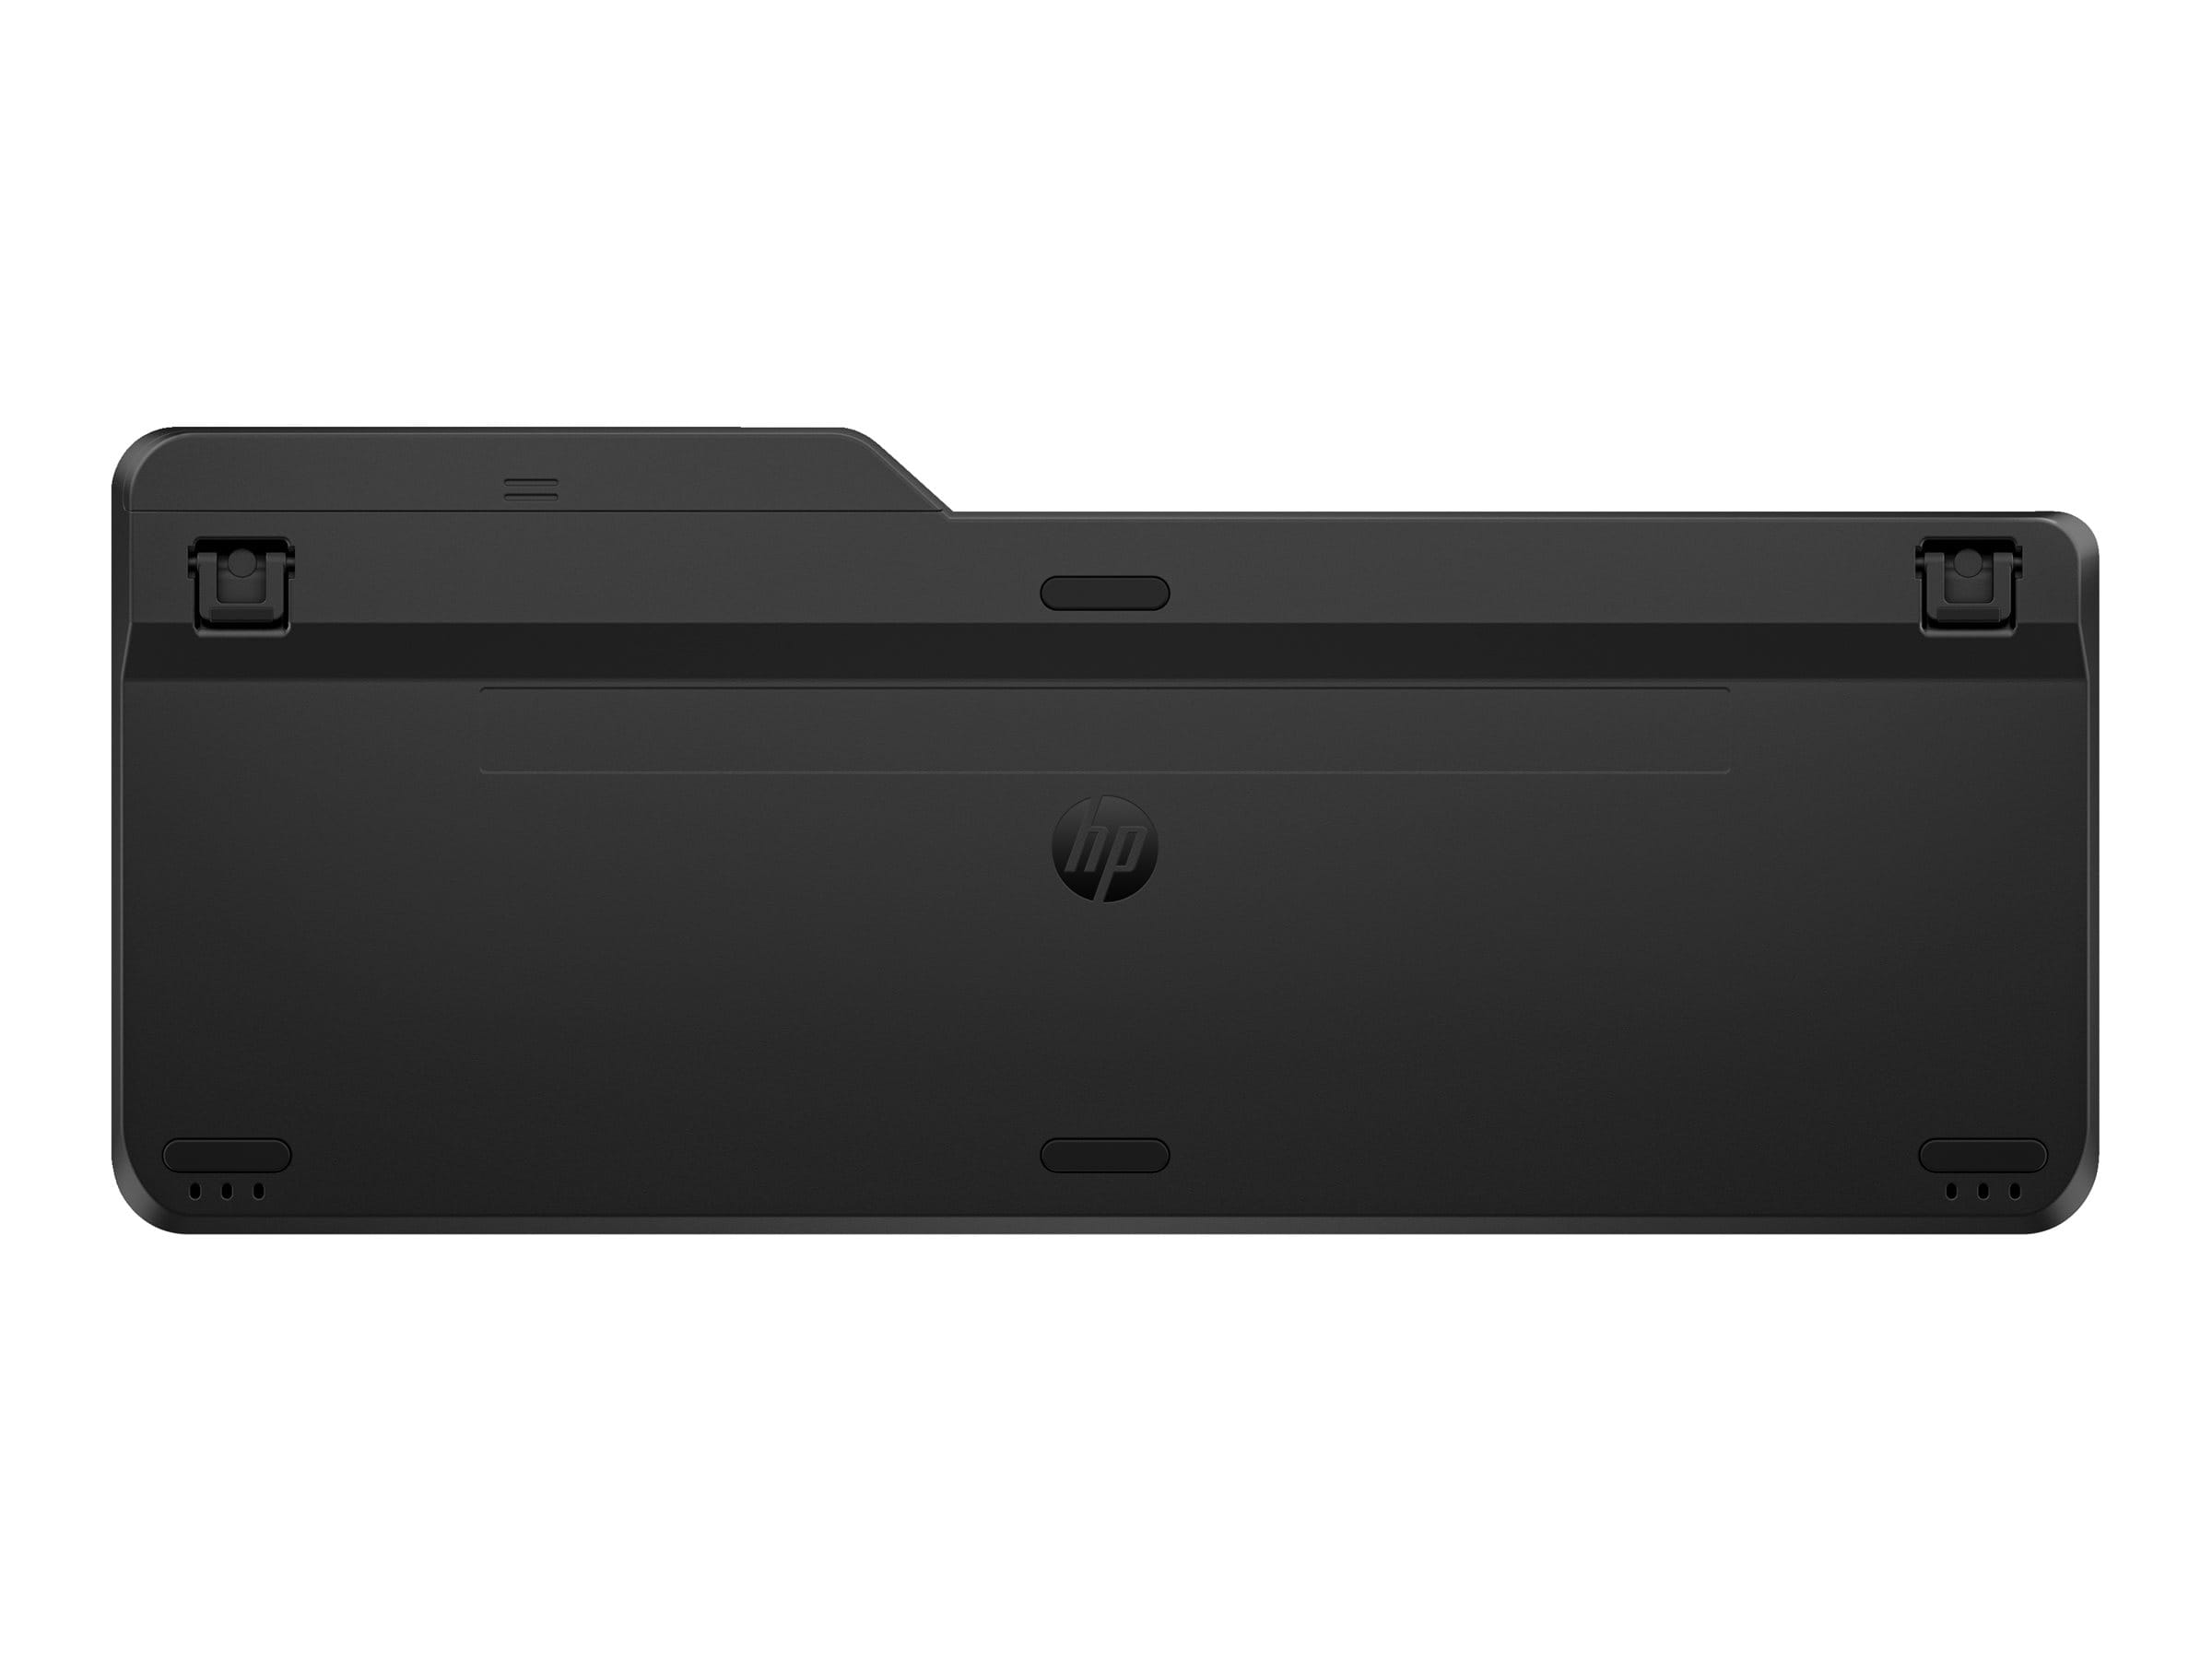 HP 475 - Tastatur - Dual-Mode, Multi-Device, kompakt, 2-Zonen-Layout, geringer Tastenhub, 12 programmierbare Tasten